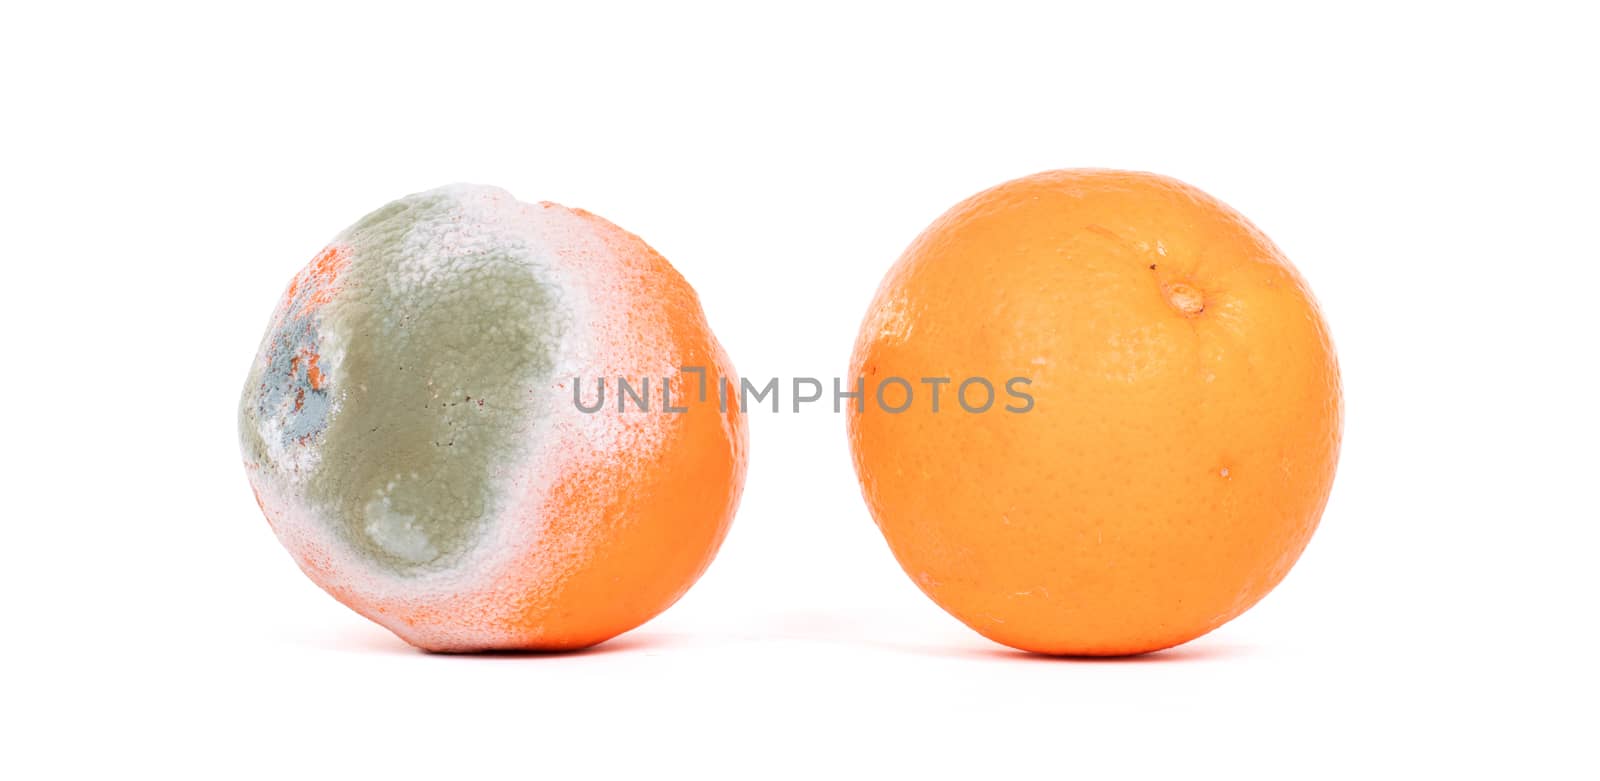 Rotten orange isolated on a white background